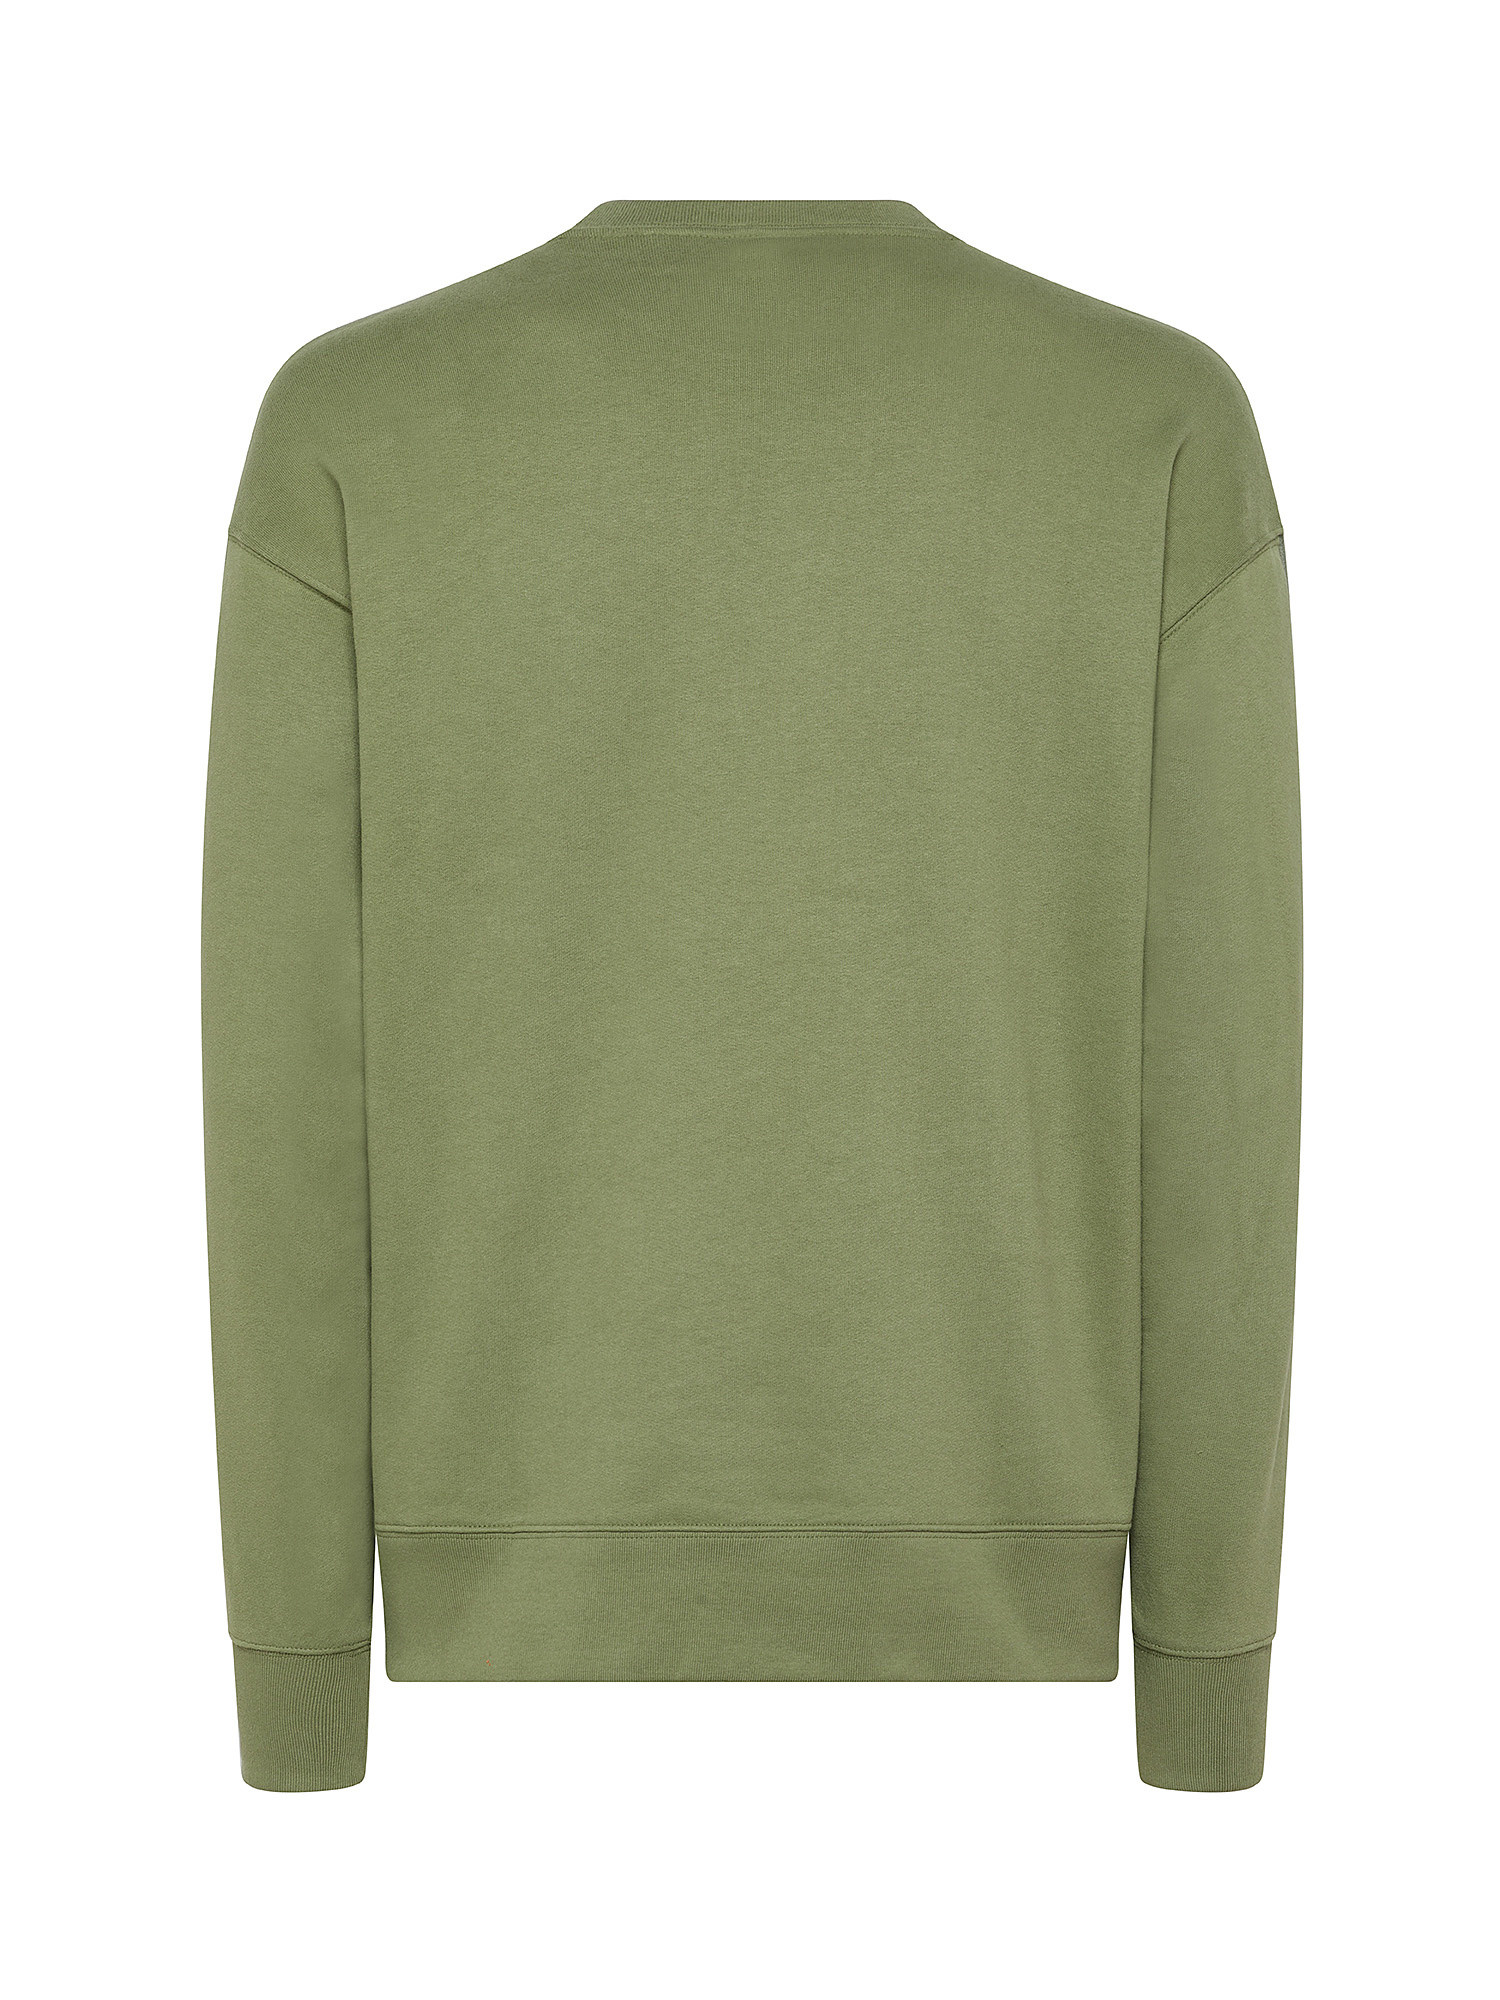 Levi's - Cotton sweatshirt with logo, Light Green, large image number 1